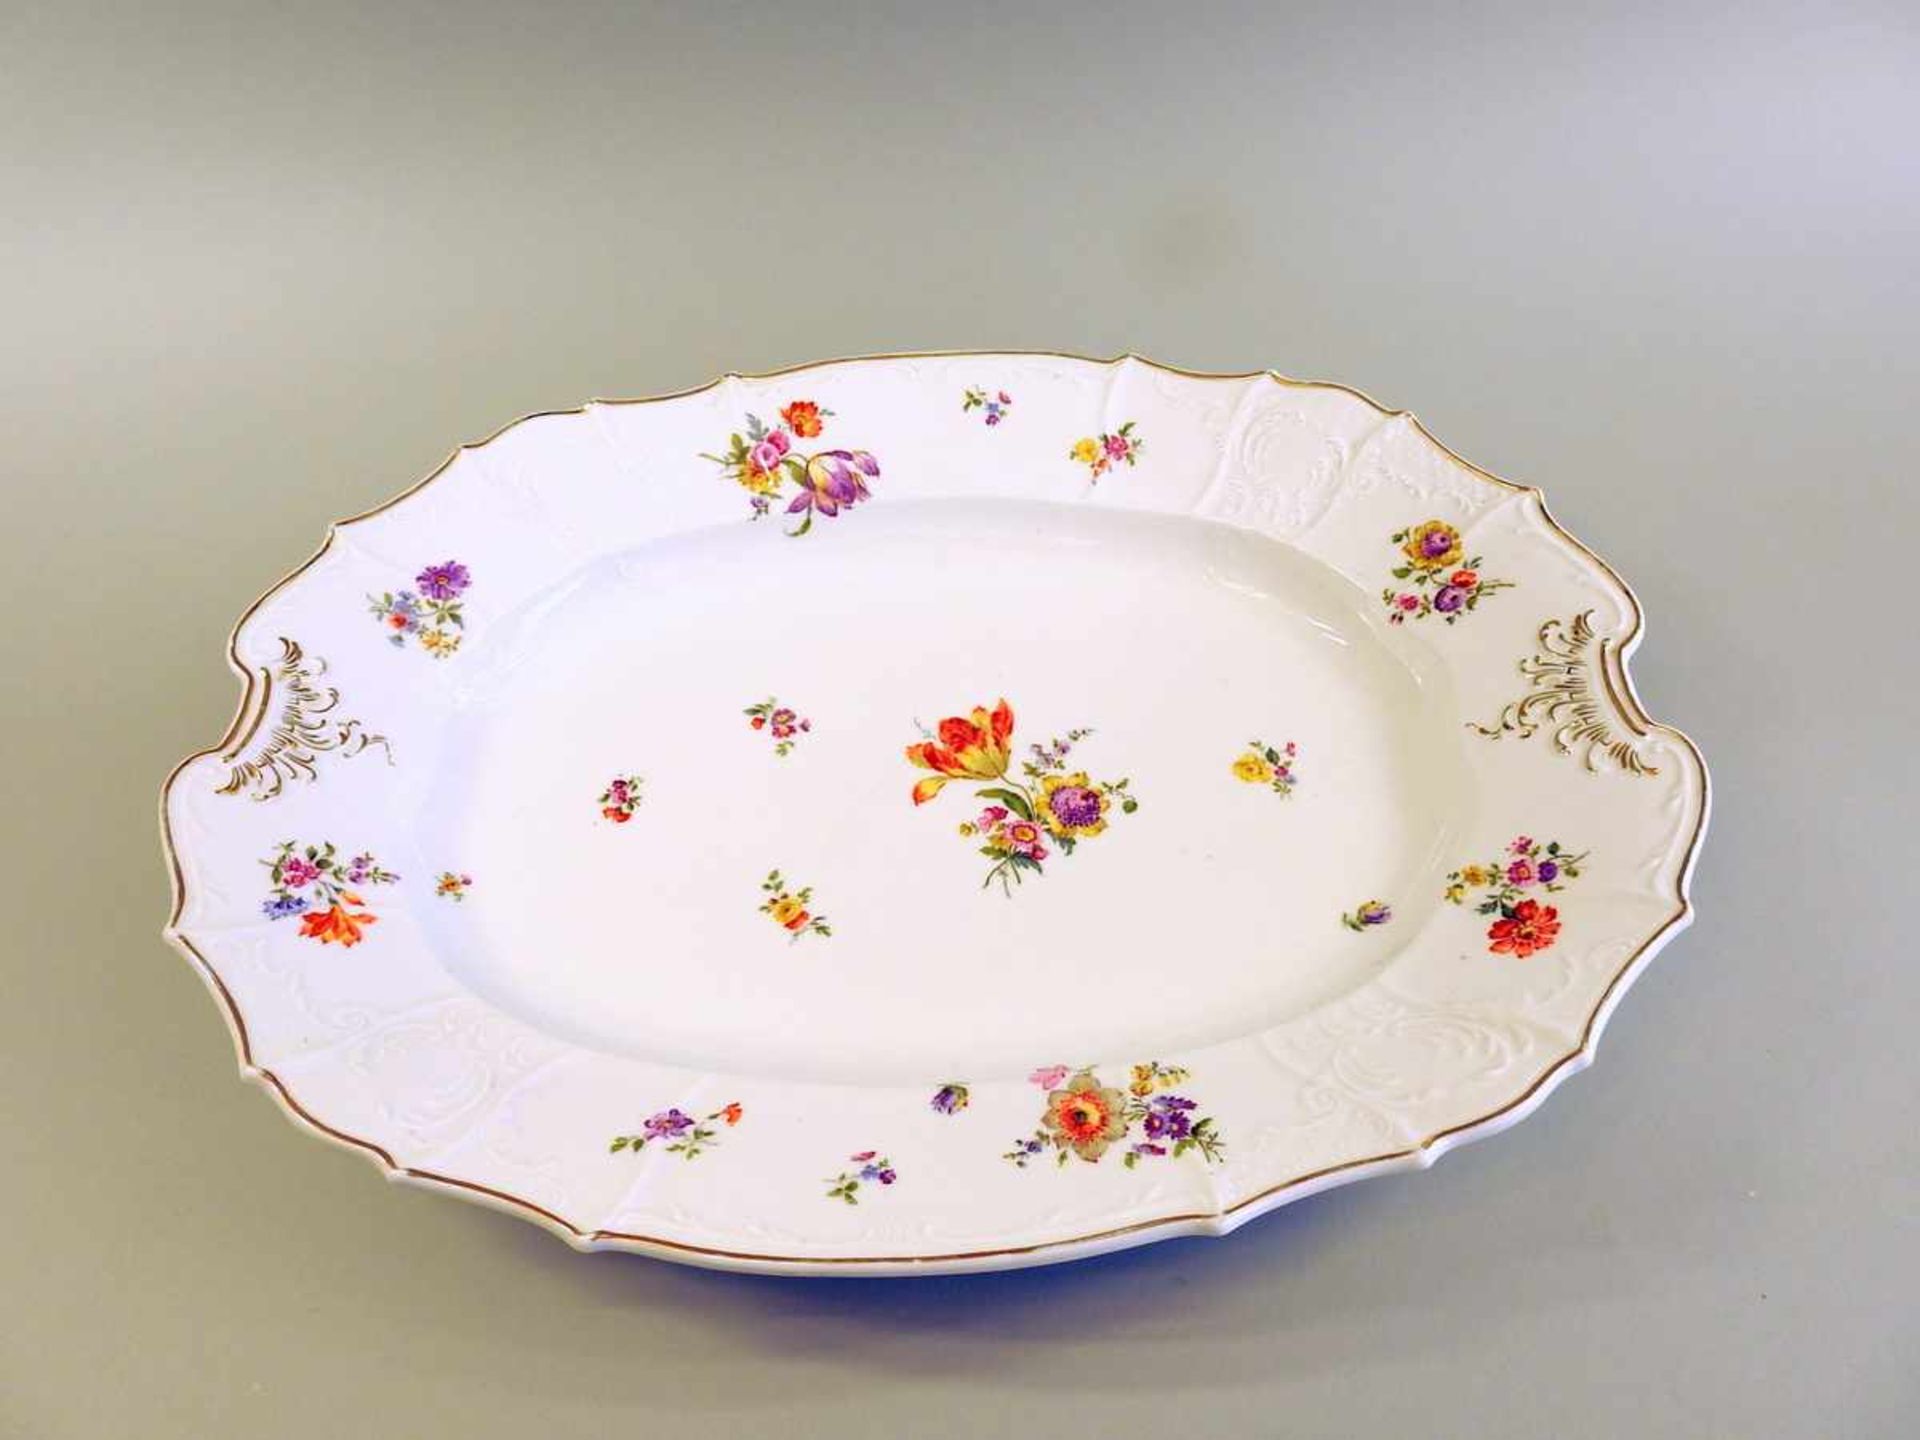 Böhmische Platte Porzellan, bunt bemalt, floral, Bouquetdekor. Goldener staffierter Rippenrand,